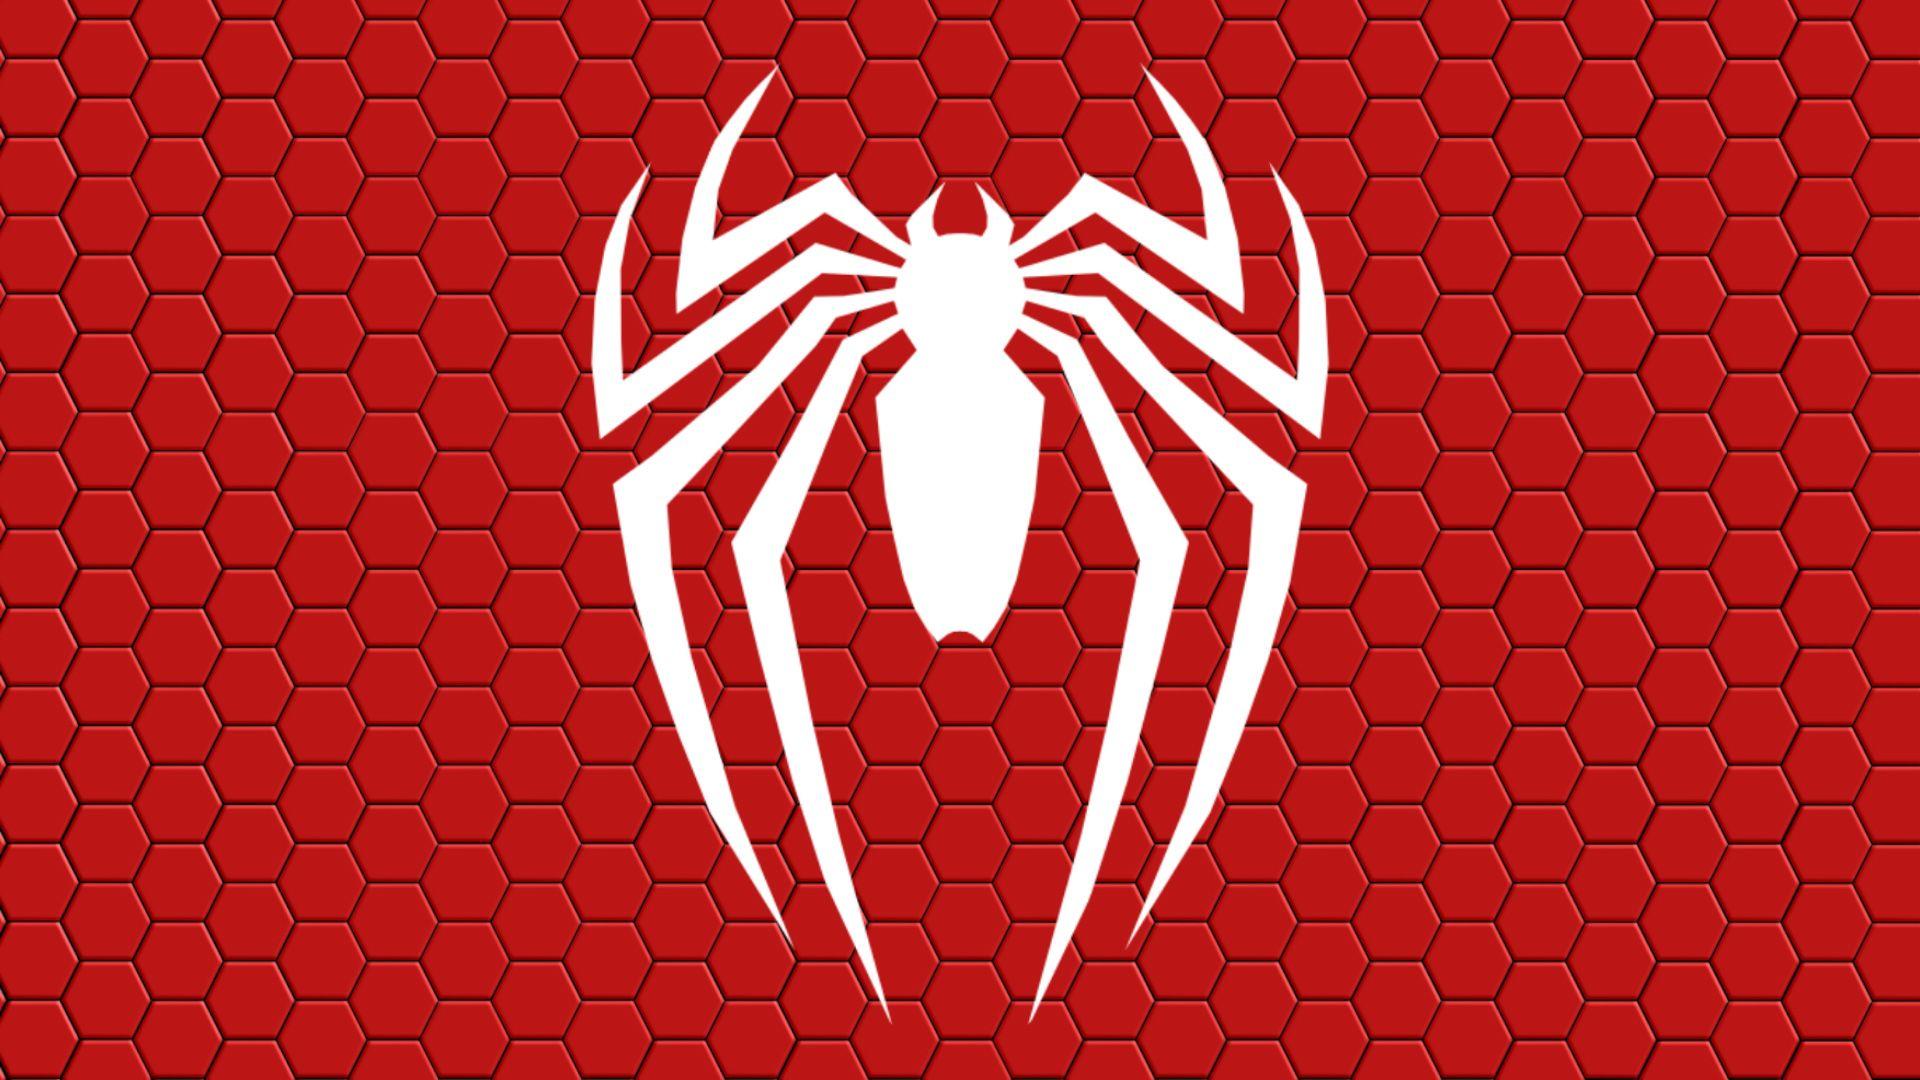 Spider Man PS4 Logo Wallpaper Free Spider Man PS4 Logo Background